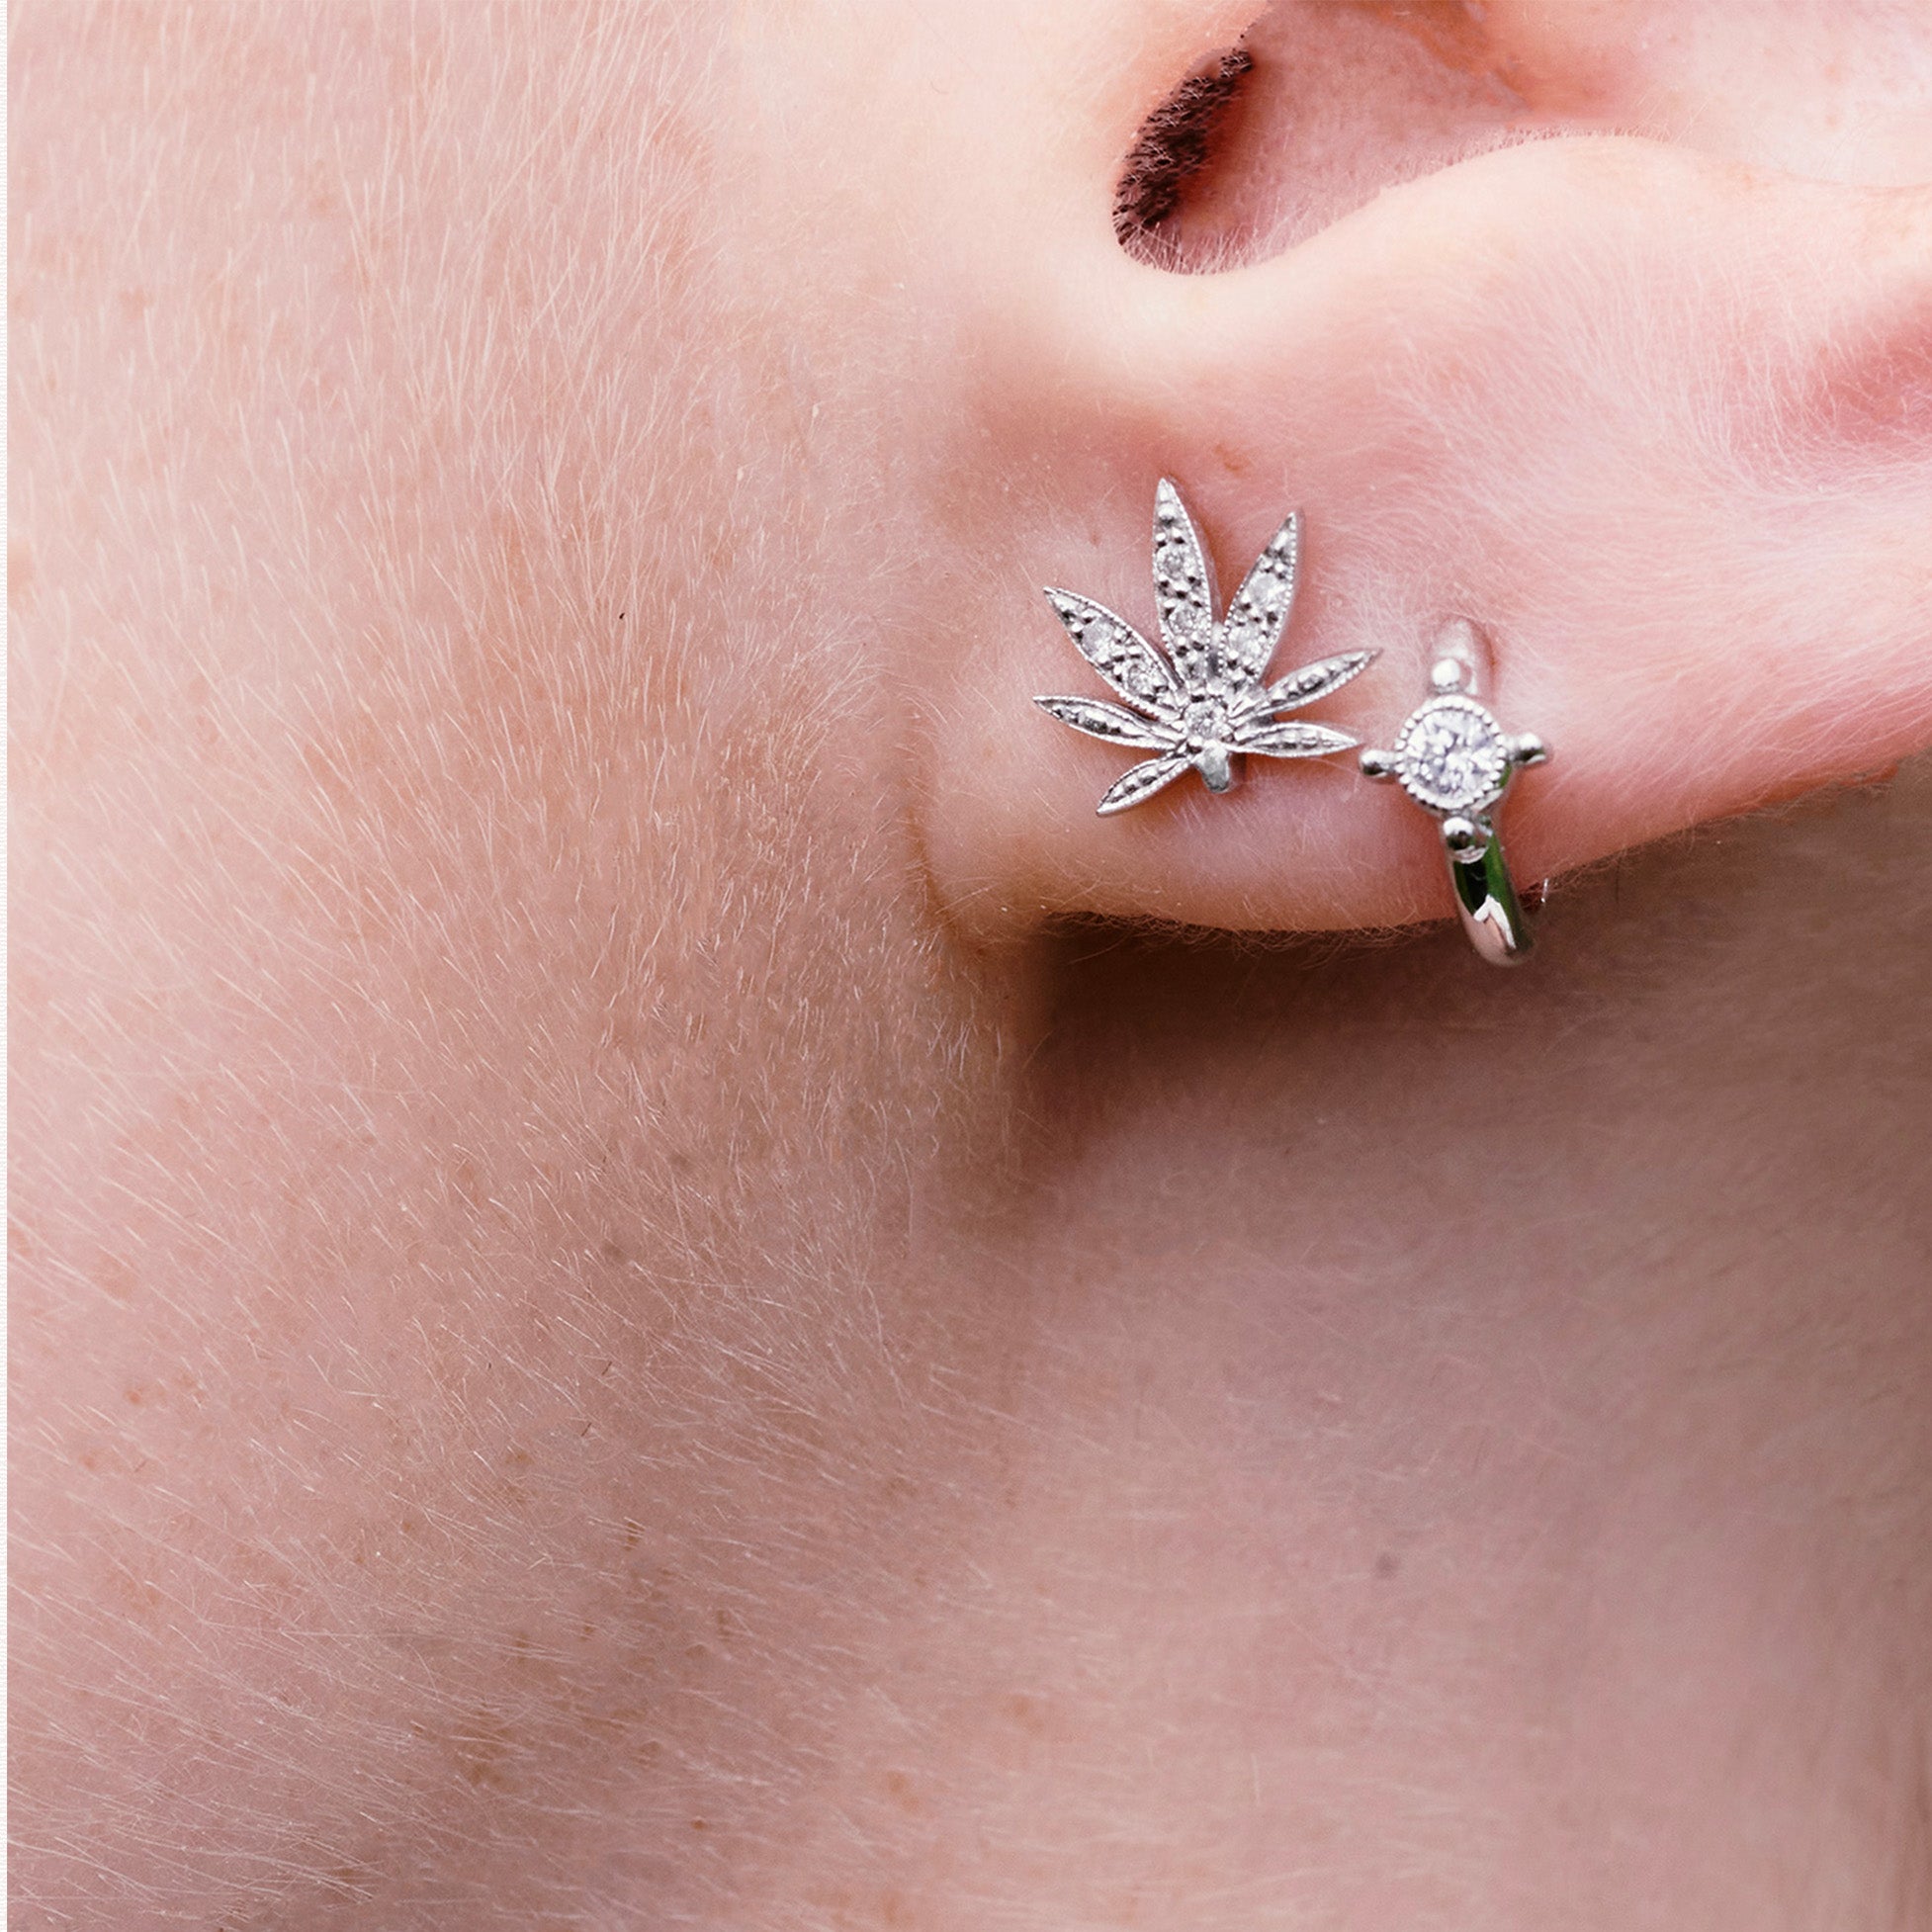 Single earrings - Mini feuille des merveilles